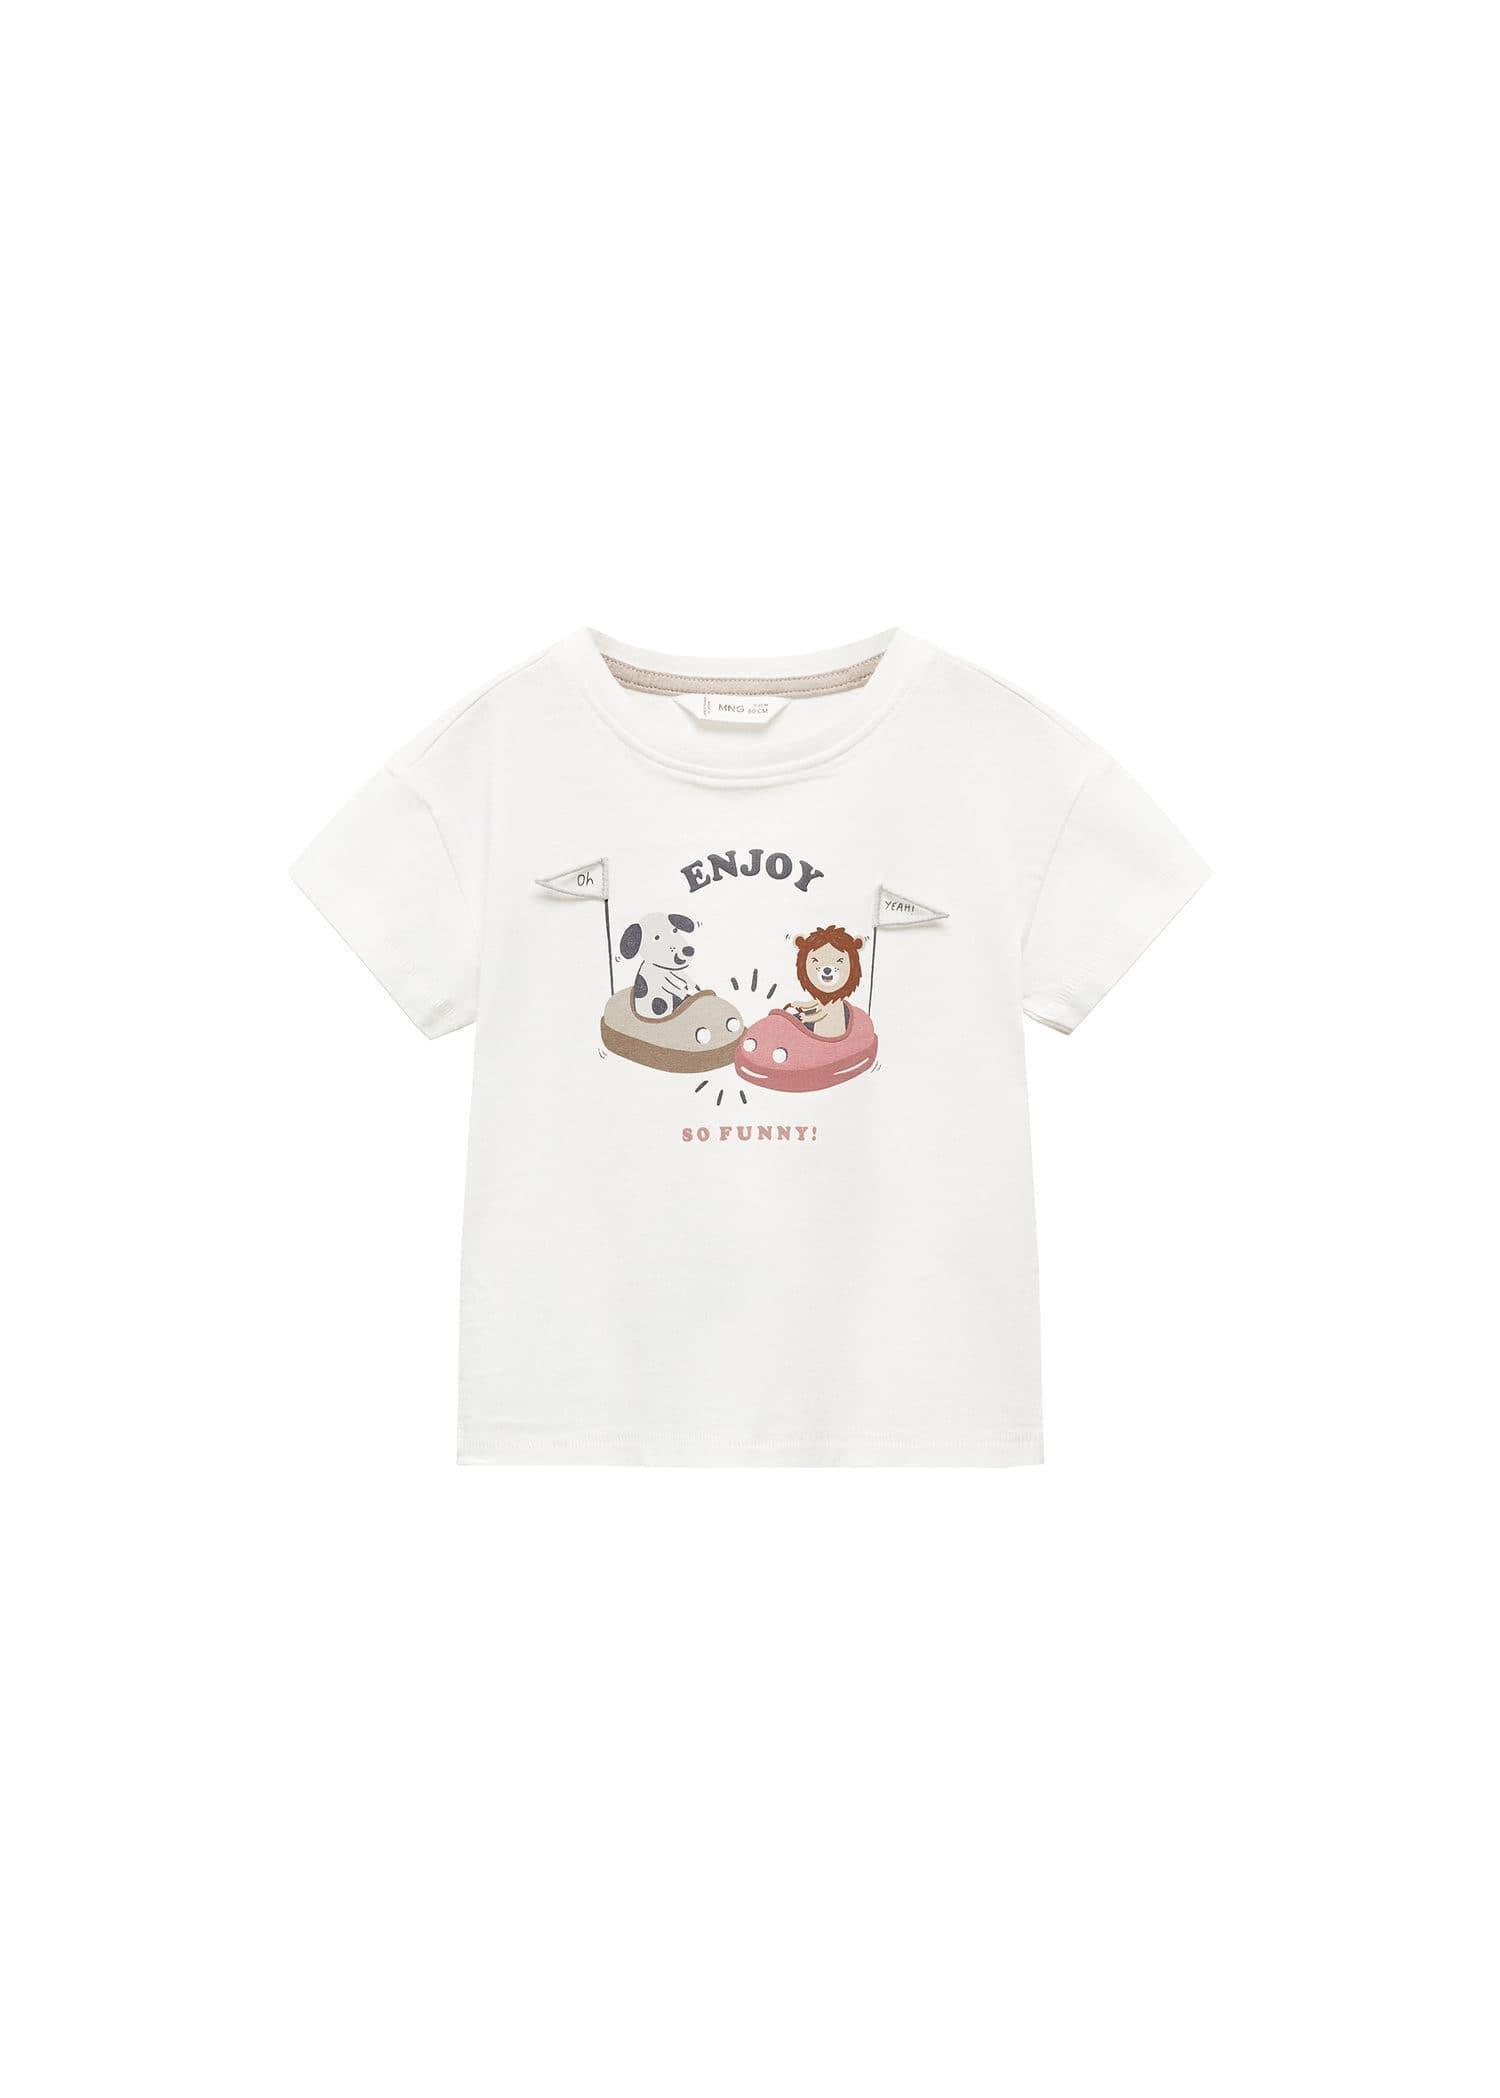 Mango - White Printed Cotton-Blend T-Shirt, Kids Boys